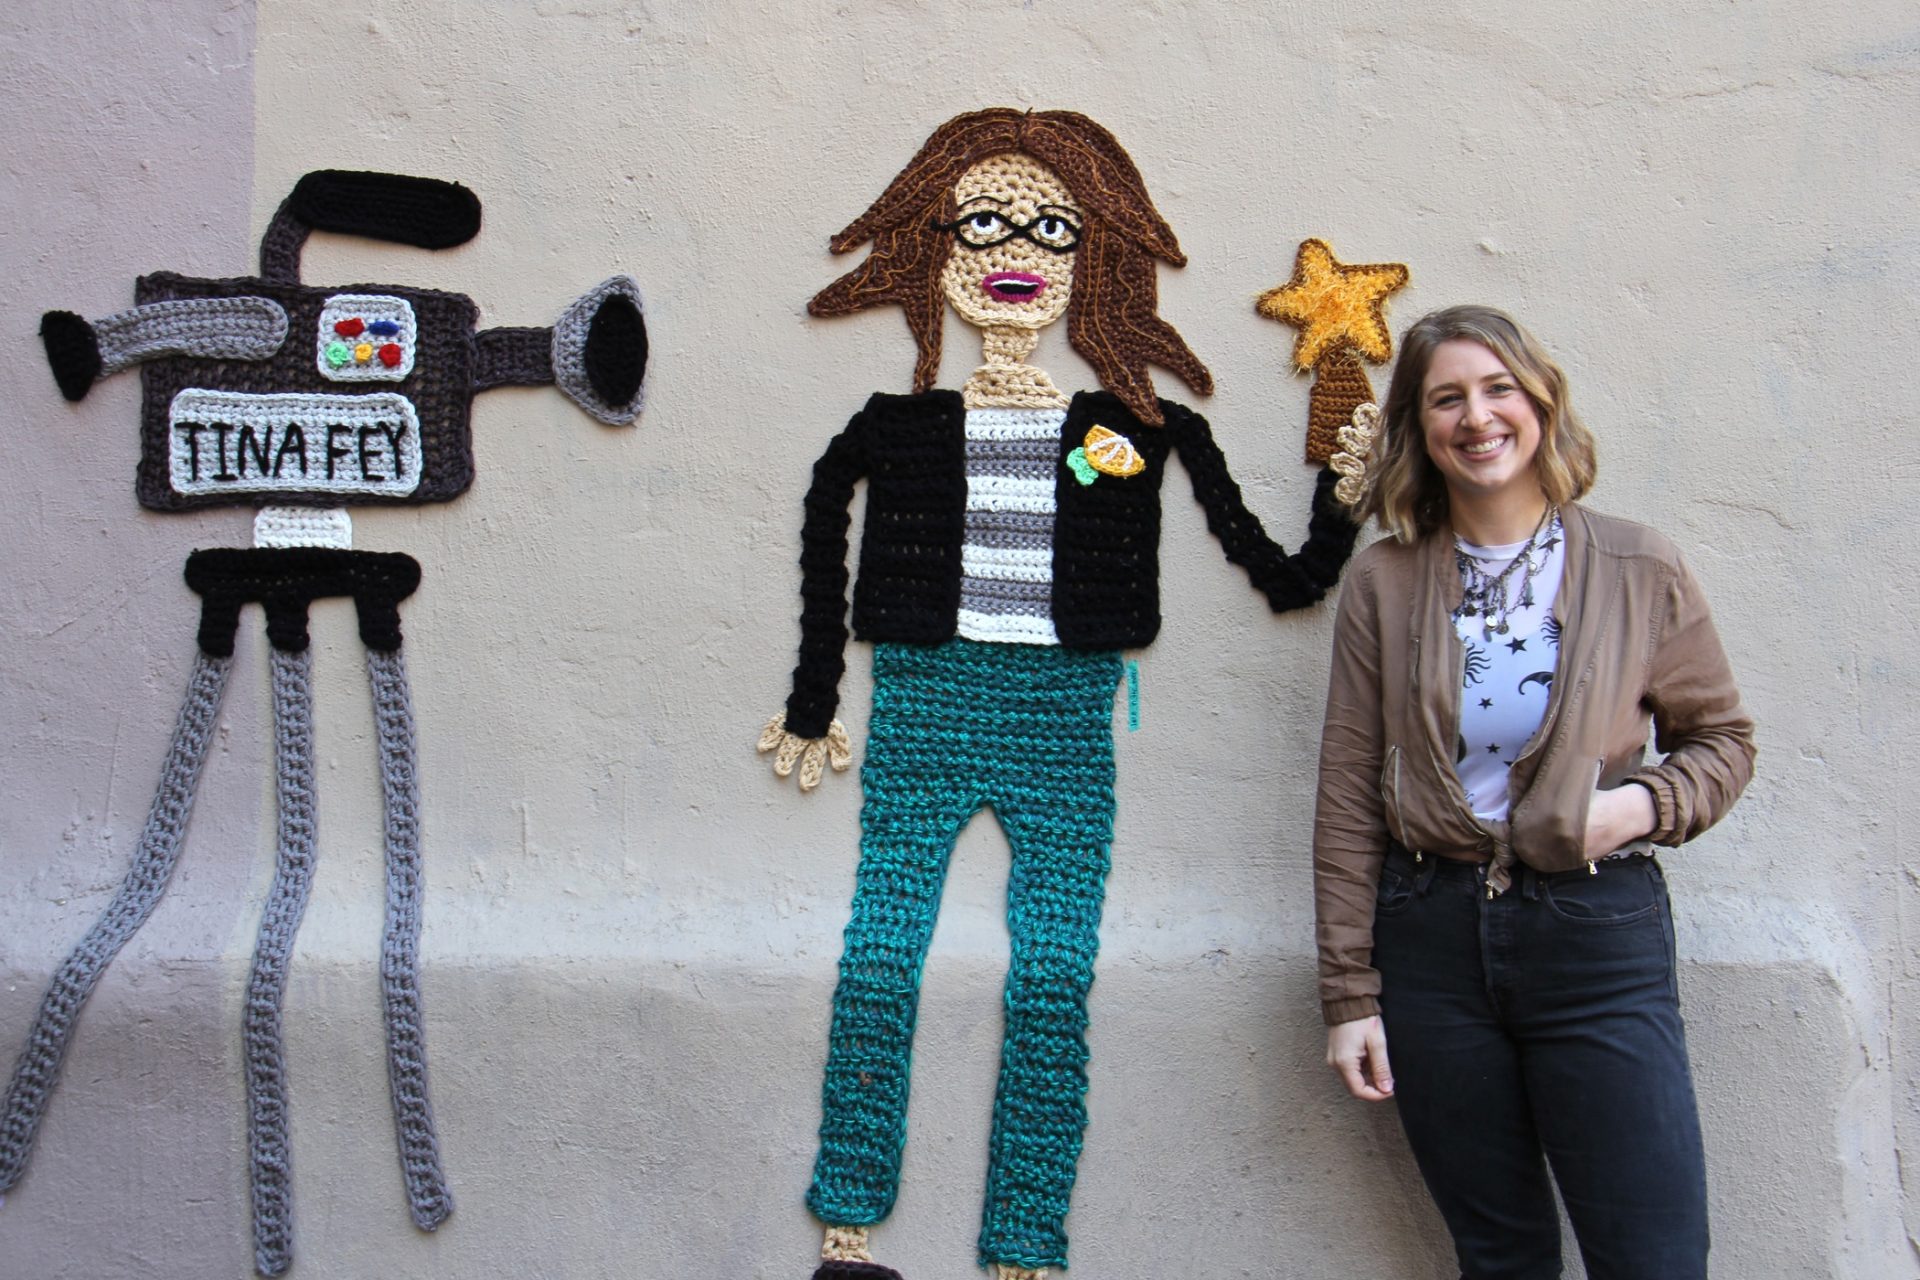 Nicole Nikolich stands beside her yarn bomb portrait of Tina Fey.